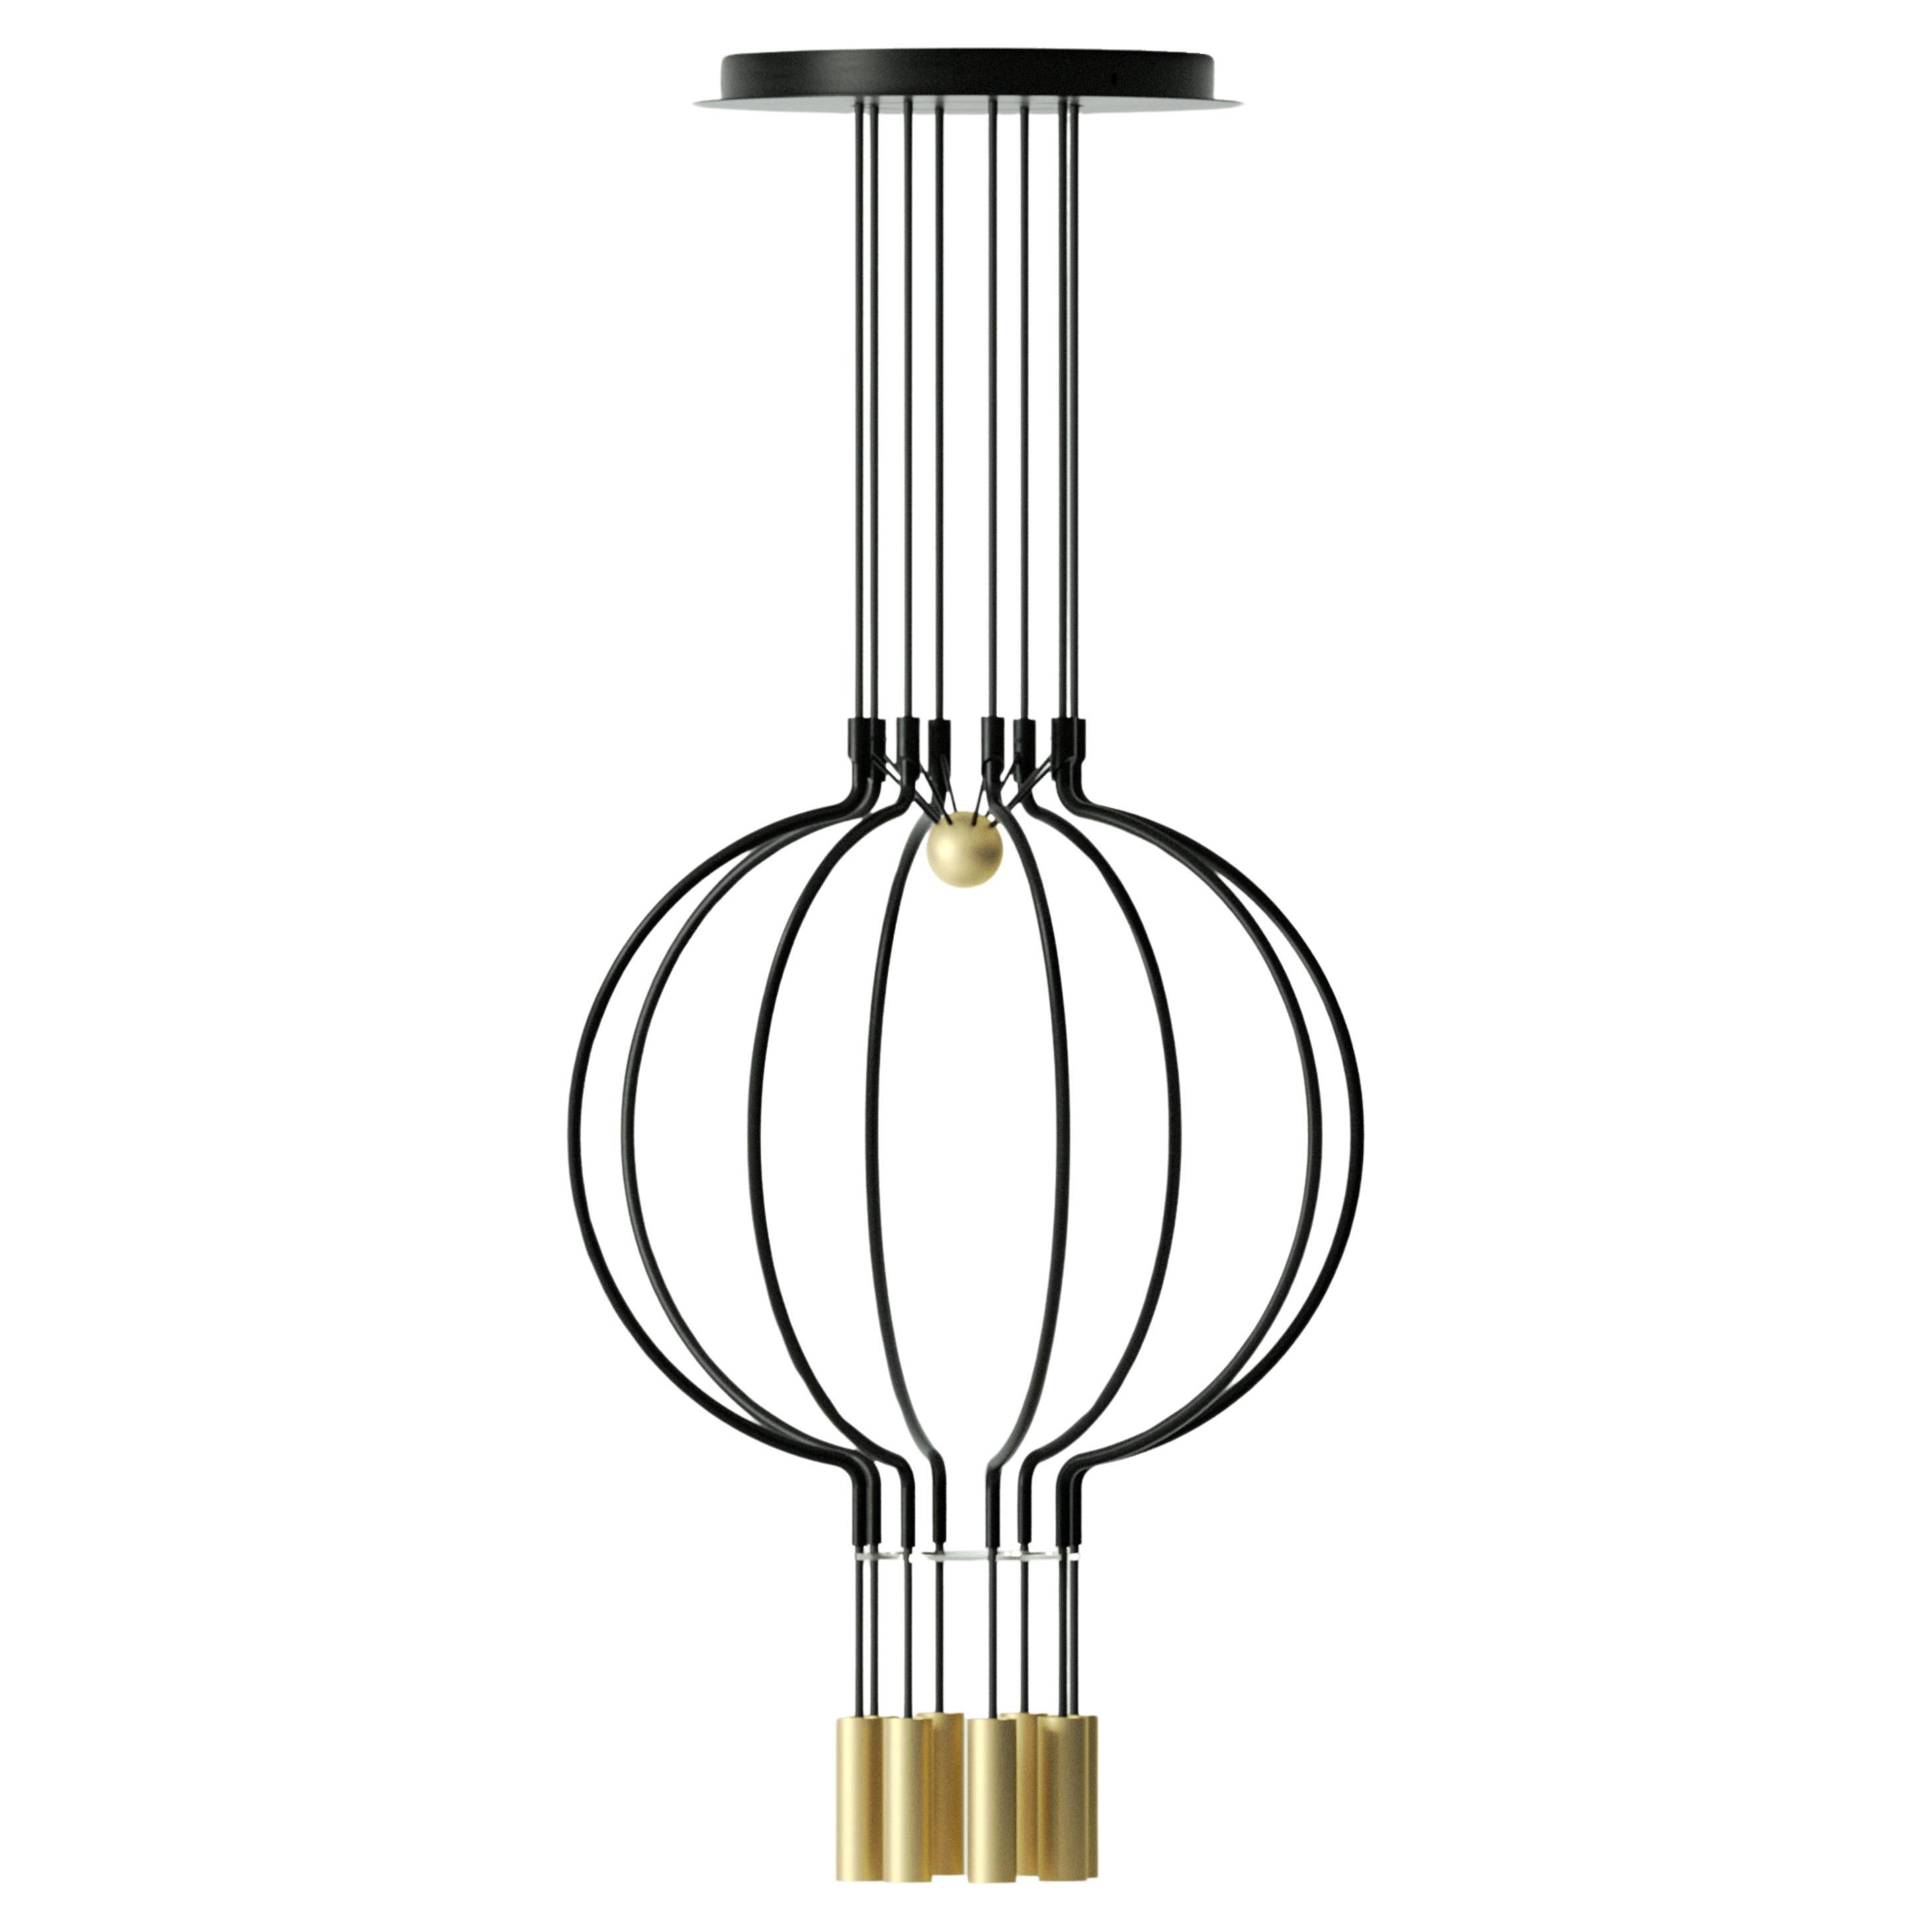 Axolight Liaison Model P8 Pendant Lamp in Black/Gold by Sara Moroni For Sale